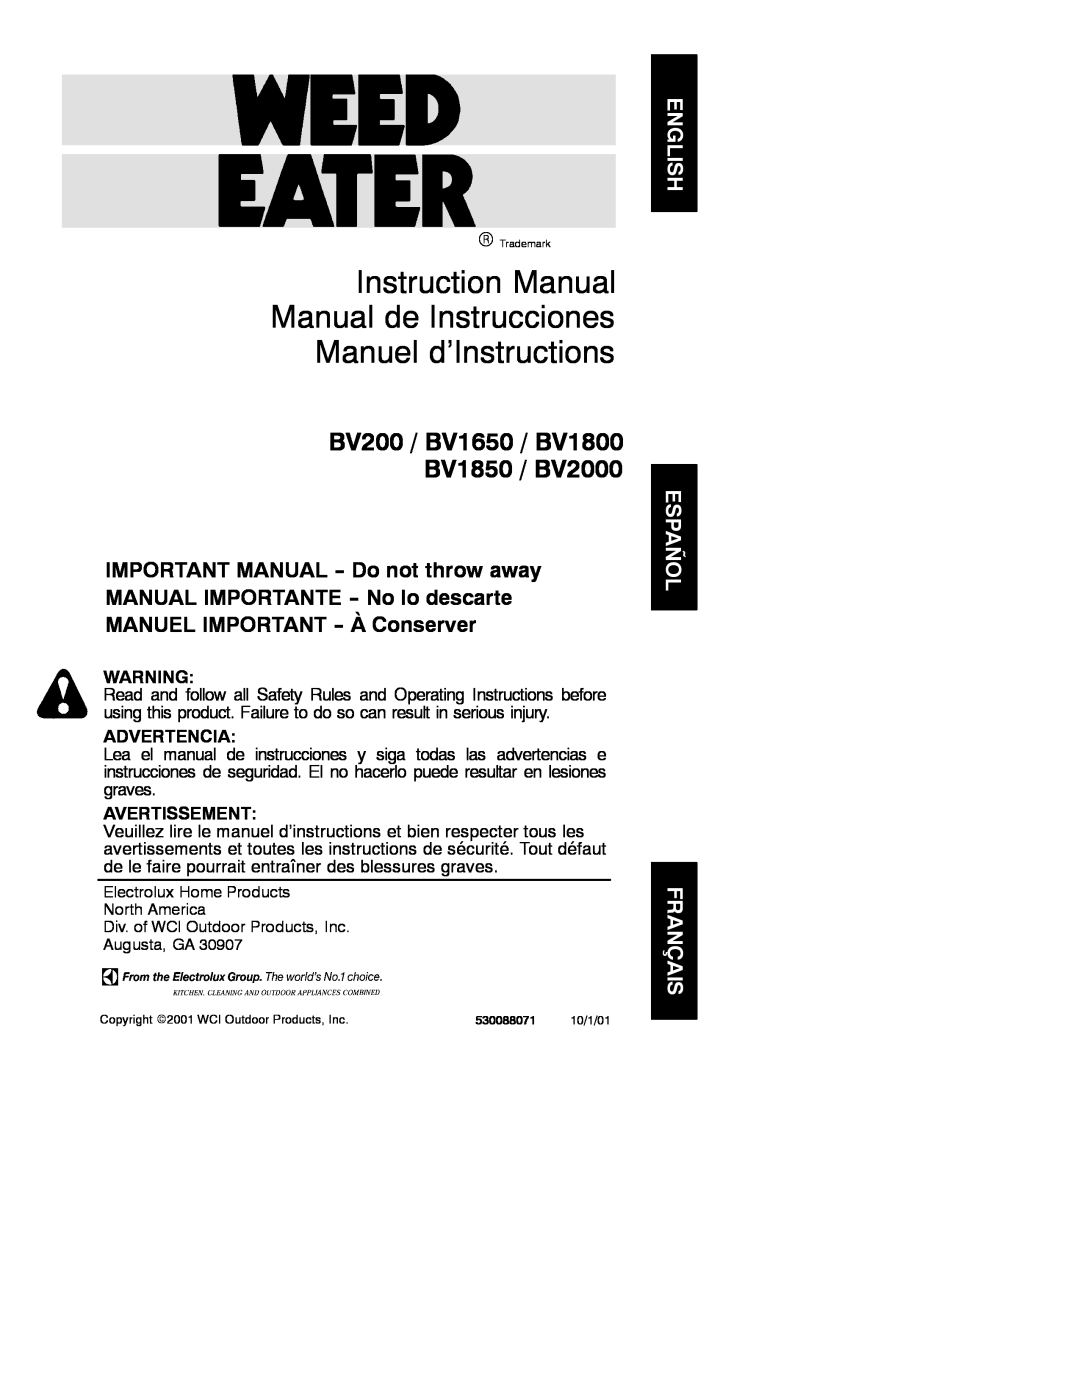 Weed Eater 530088071 instruction manual BV200 / BV1650 / BV1800 BV1850 / BV2000, Advertencia, Avertissement 